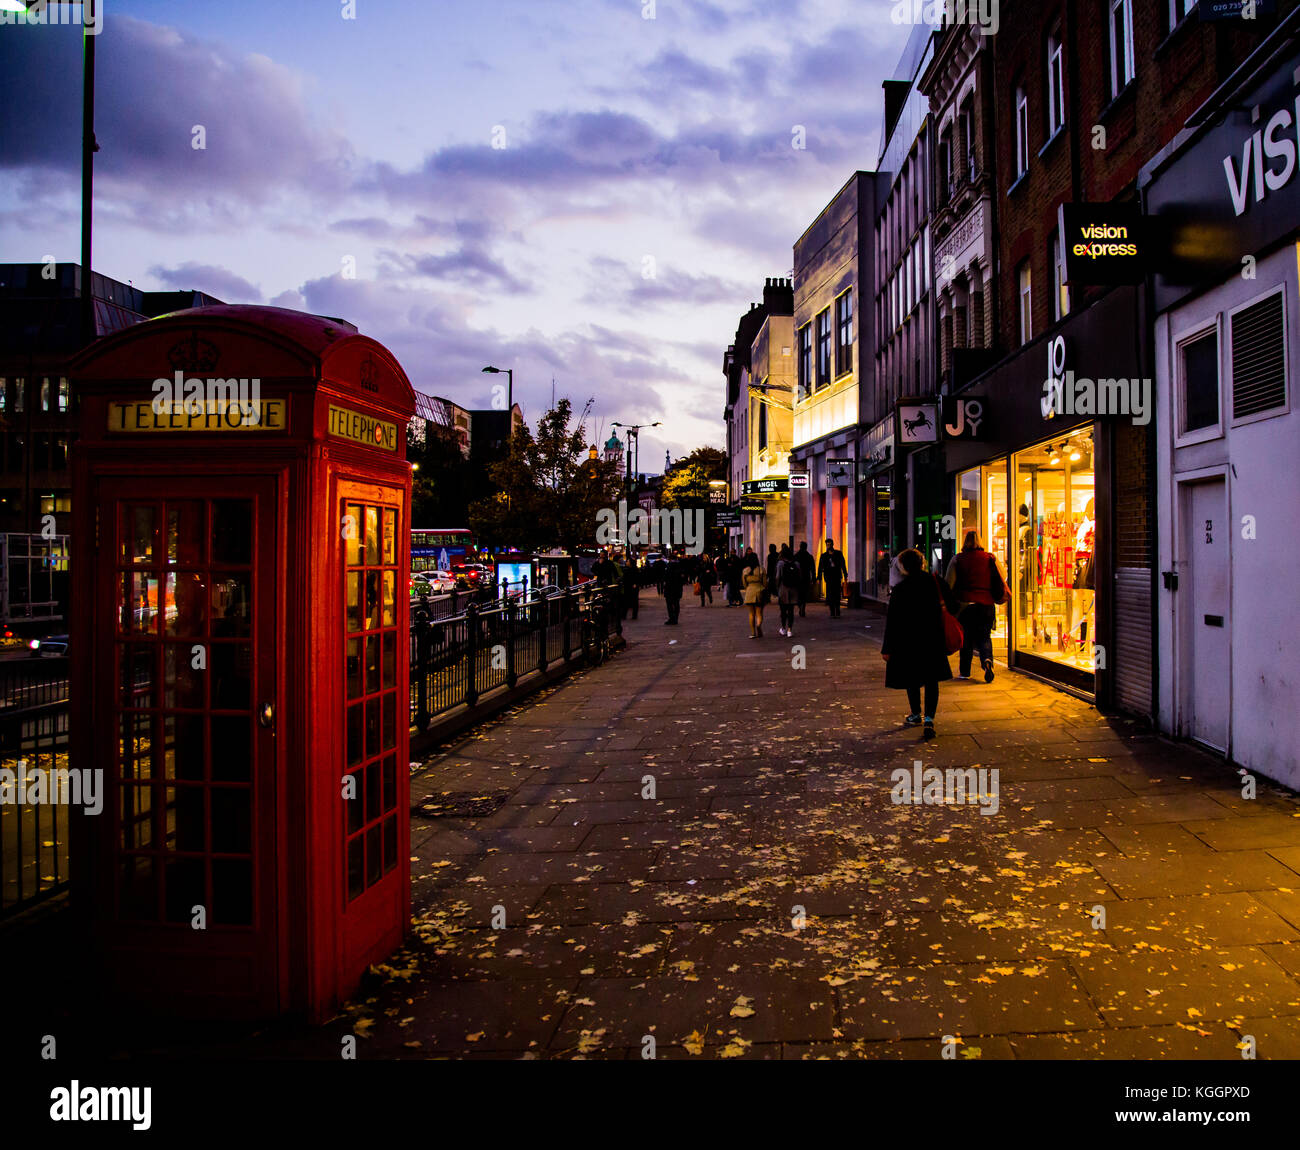 Rote Telefonzelle auf Upper Street islington am Abend Stockfoto